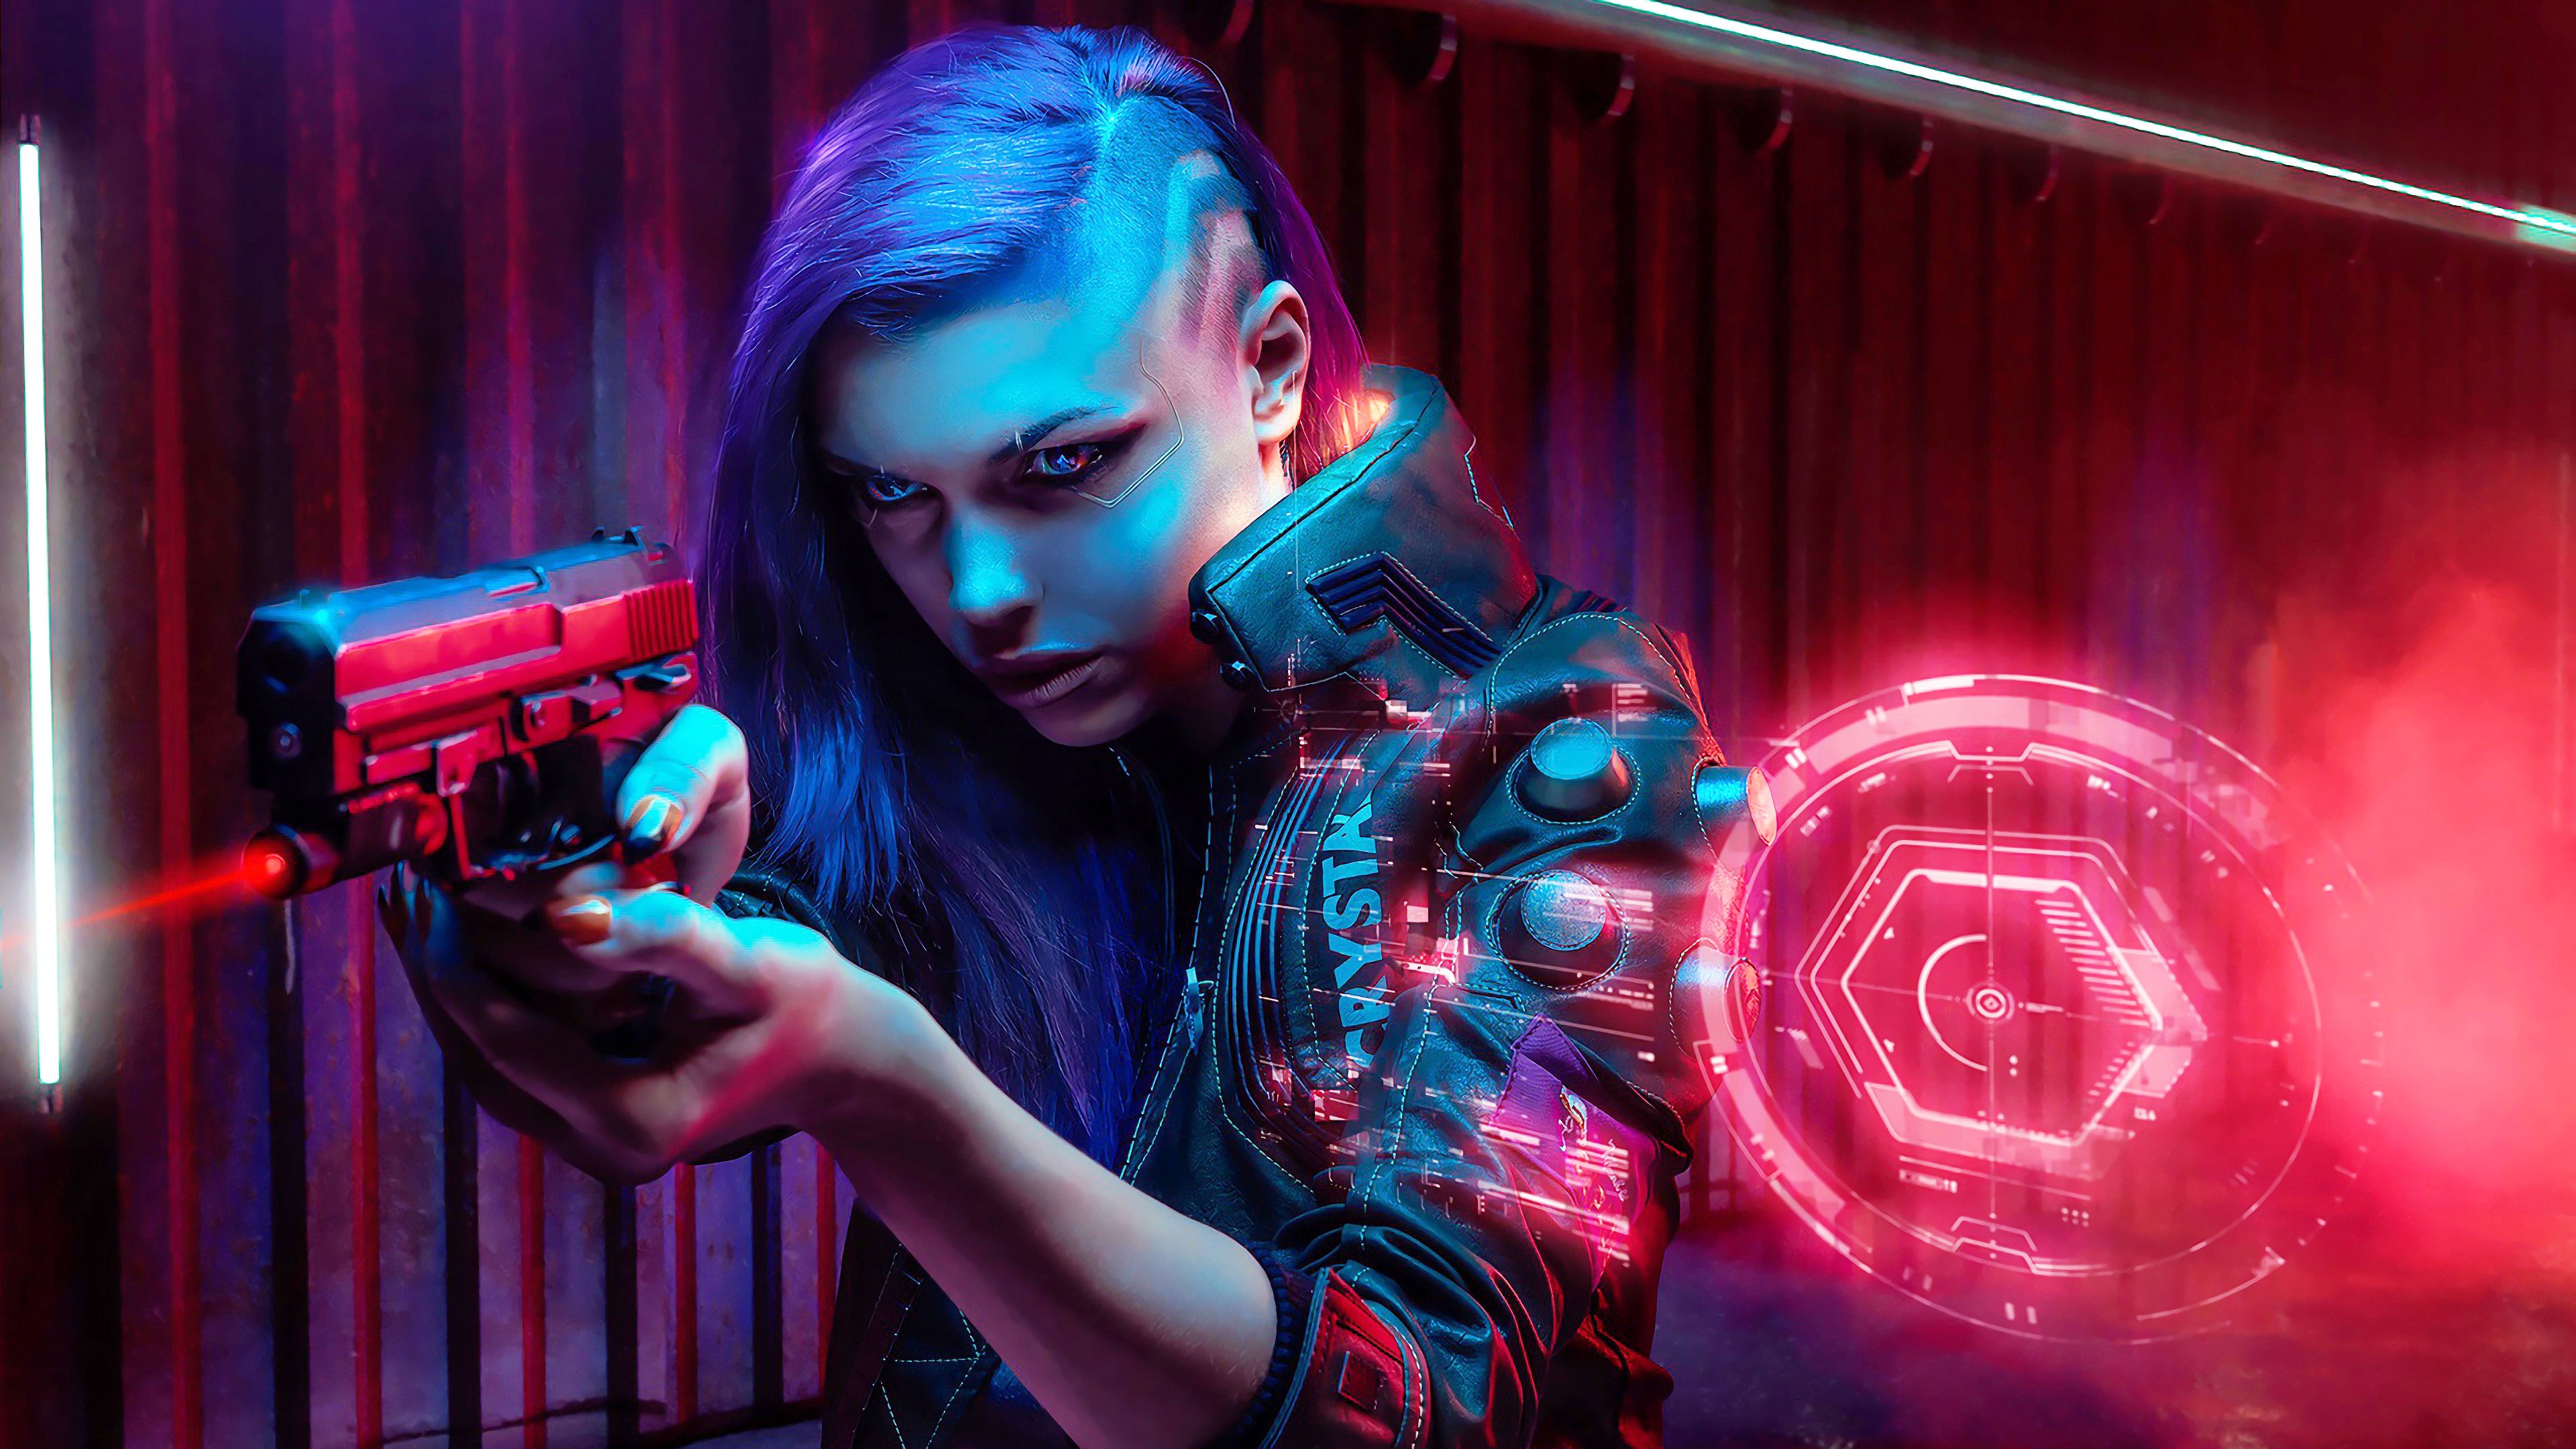 Cyberpunk 2077 4k 2020, HD Games, 4k Wallpapers, Images ...